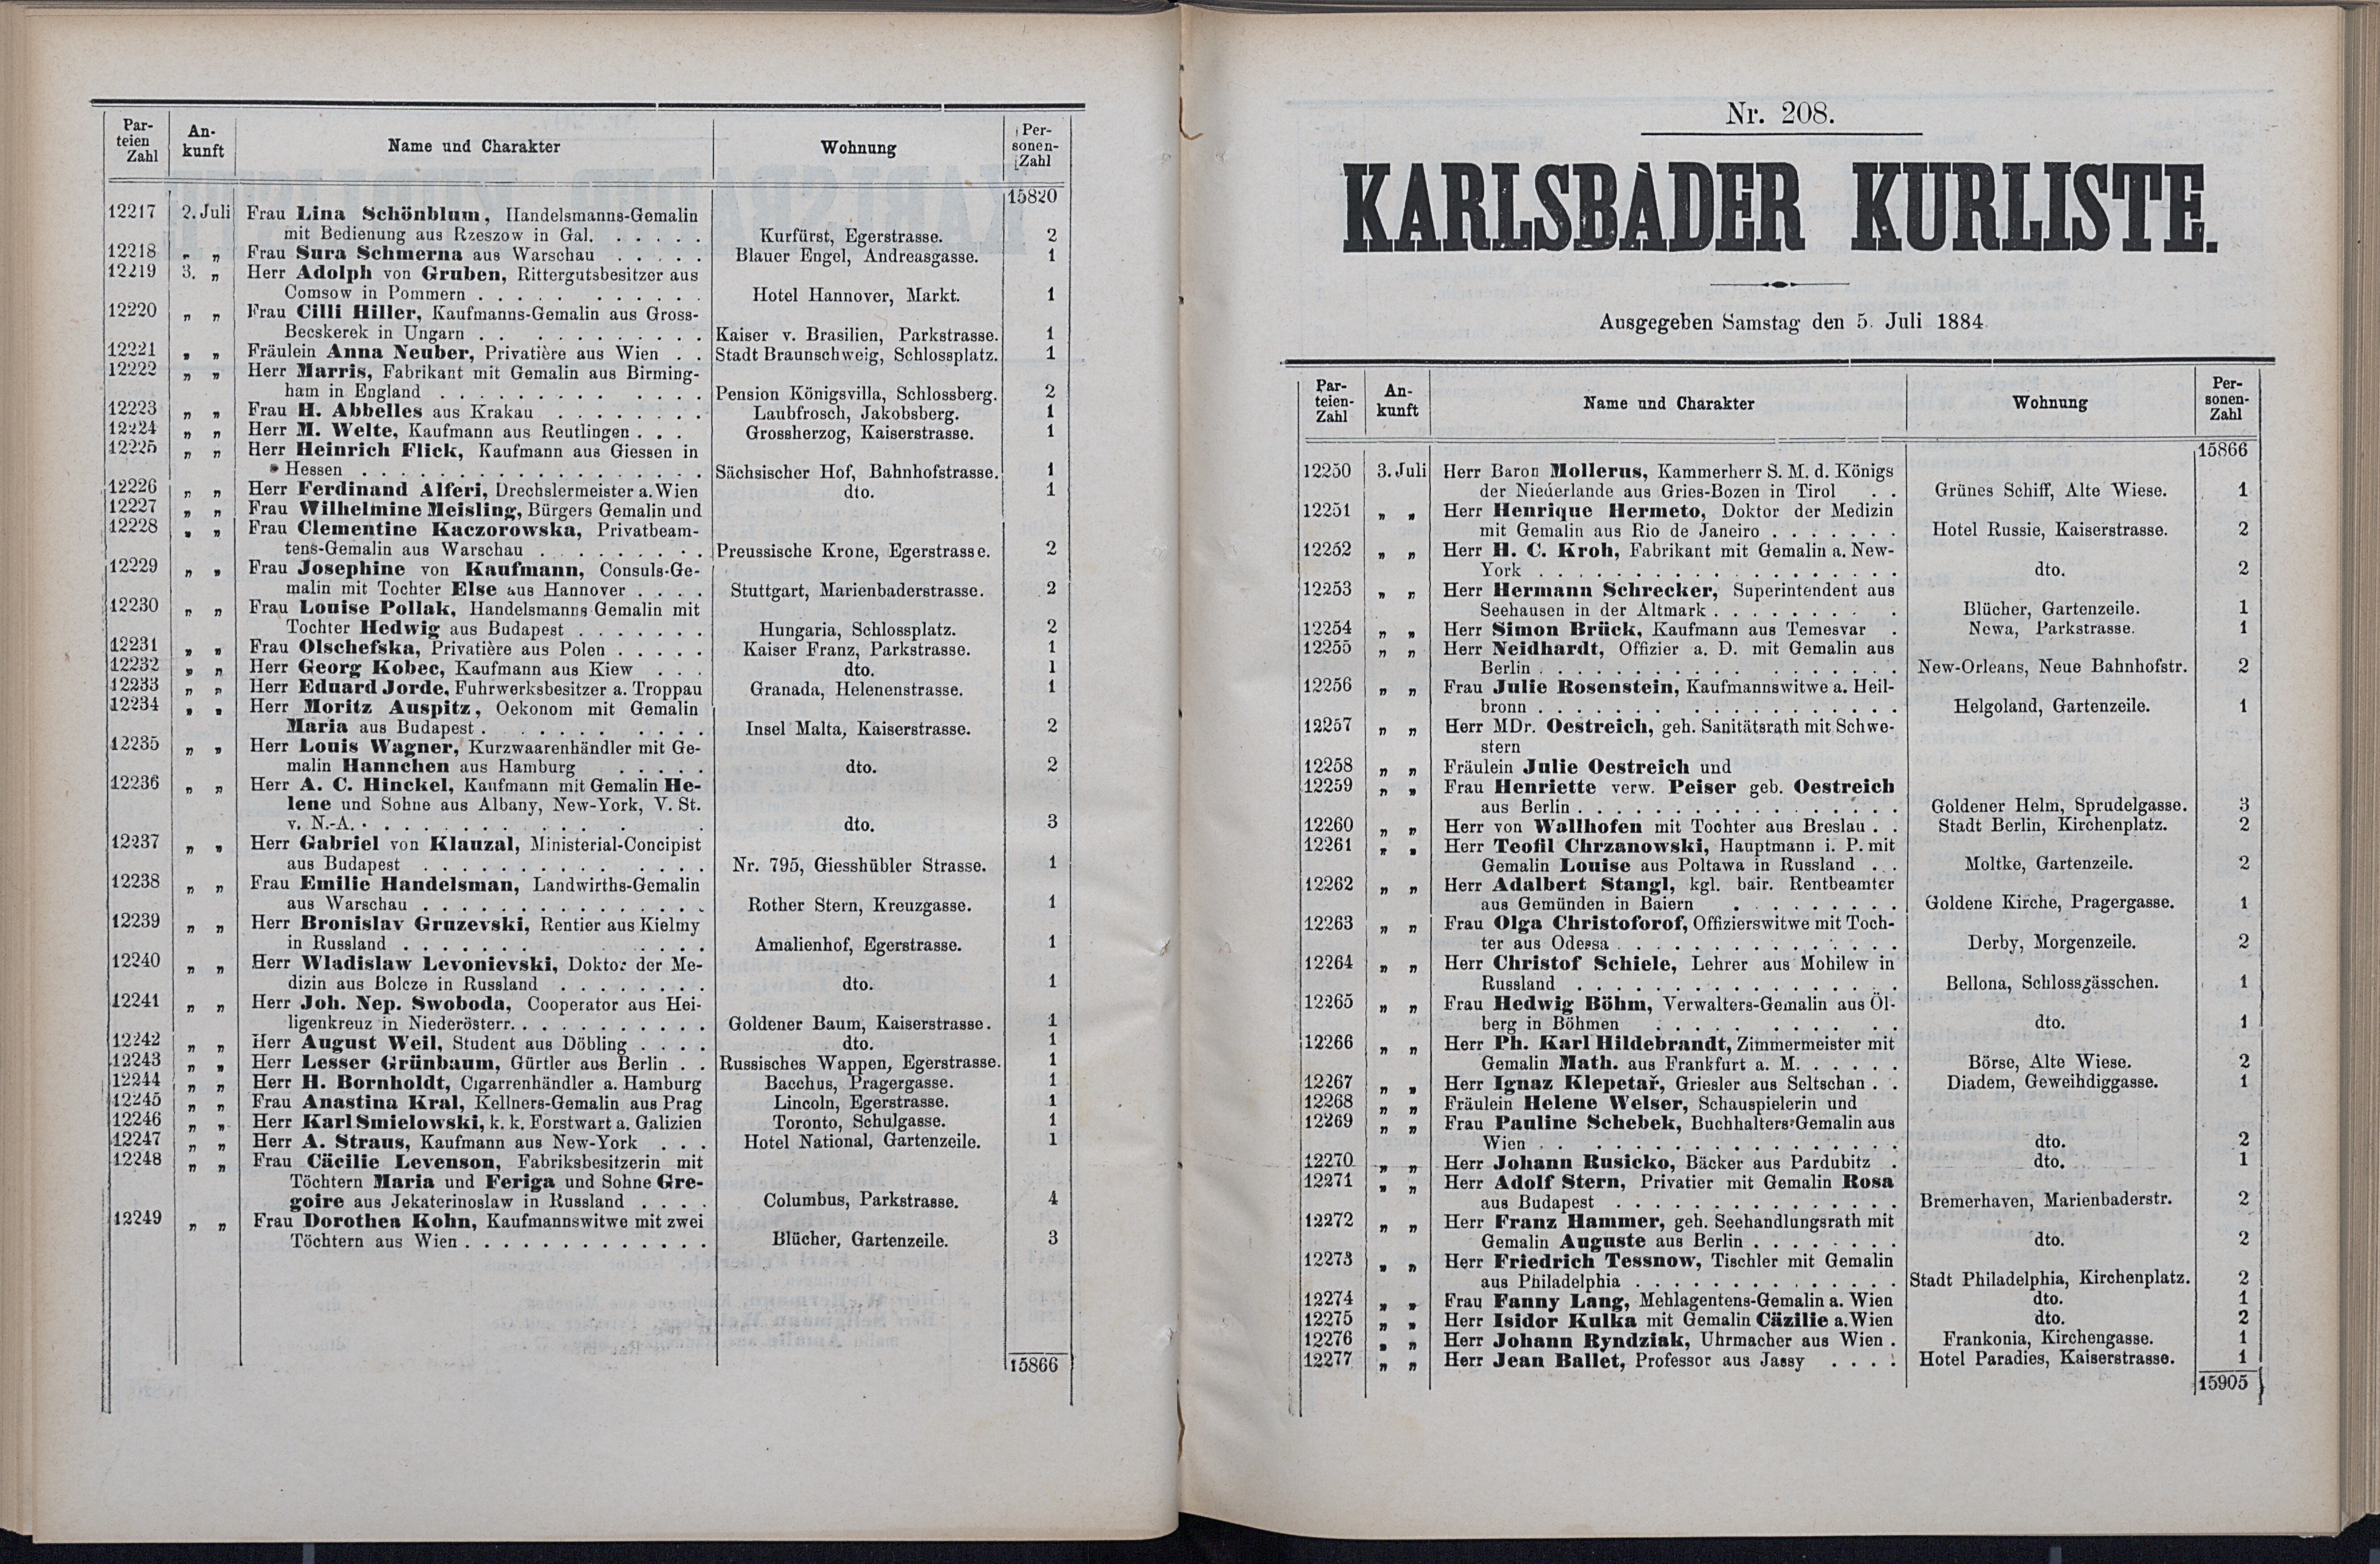 225. soap-kv_knihovna_karlsbader-kurliste-1884_2260